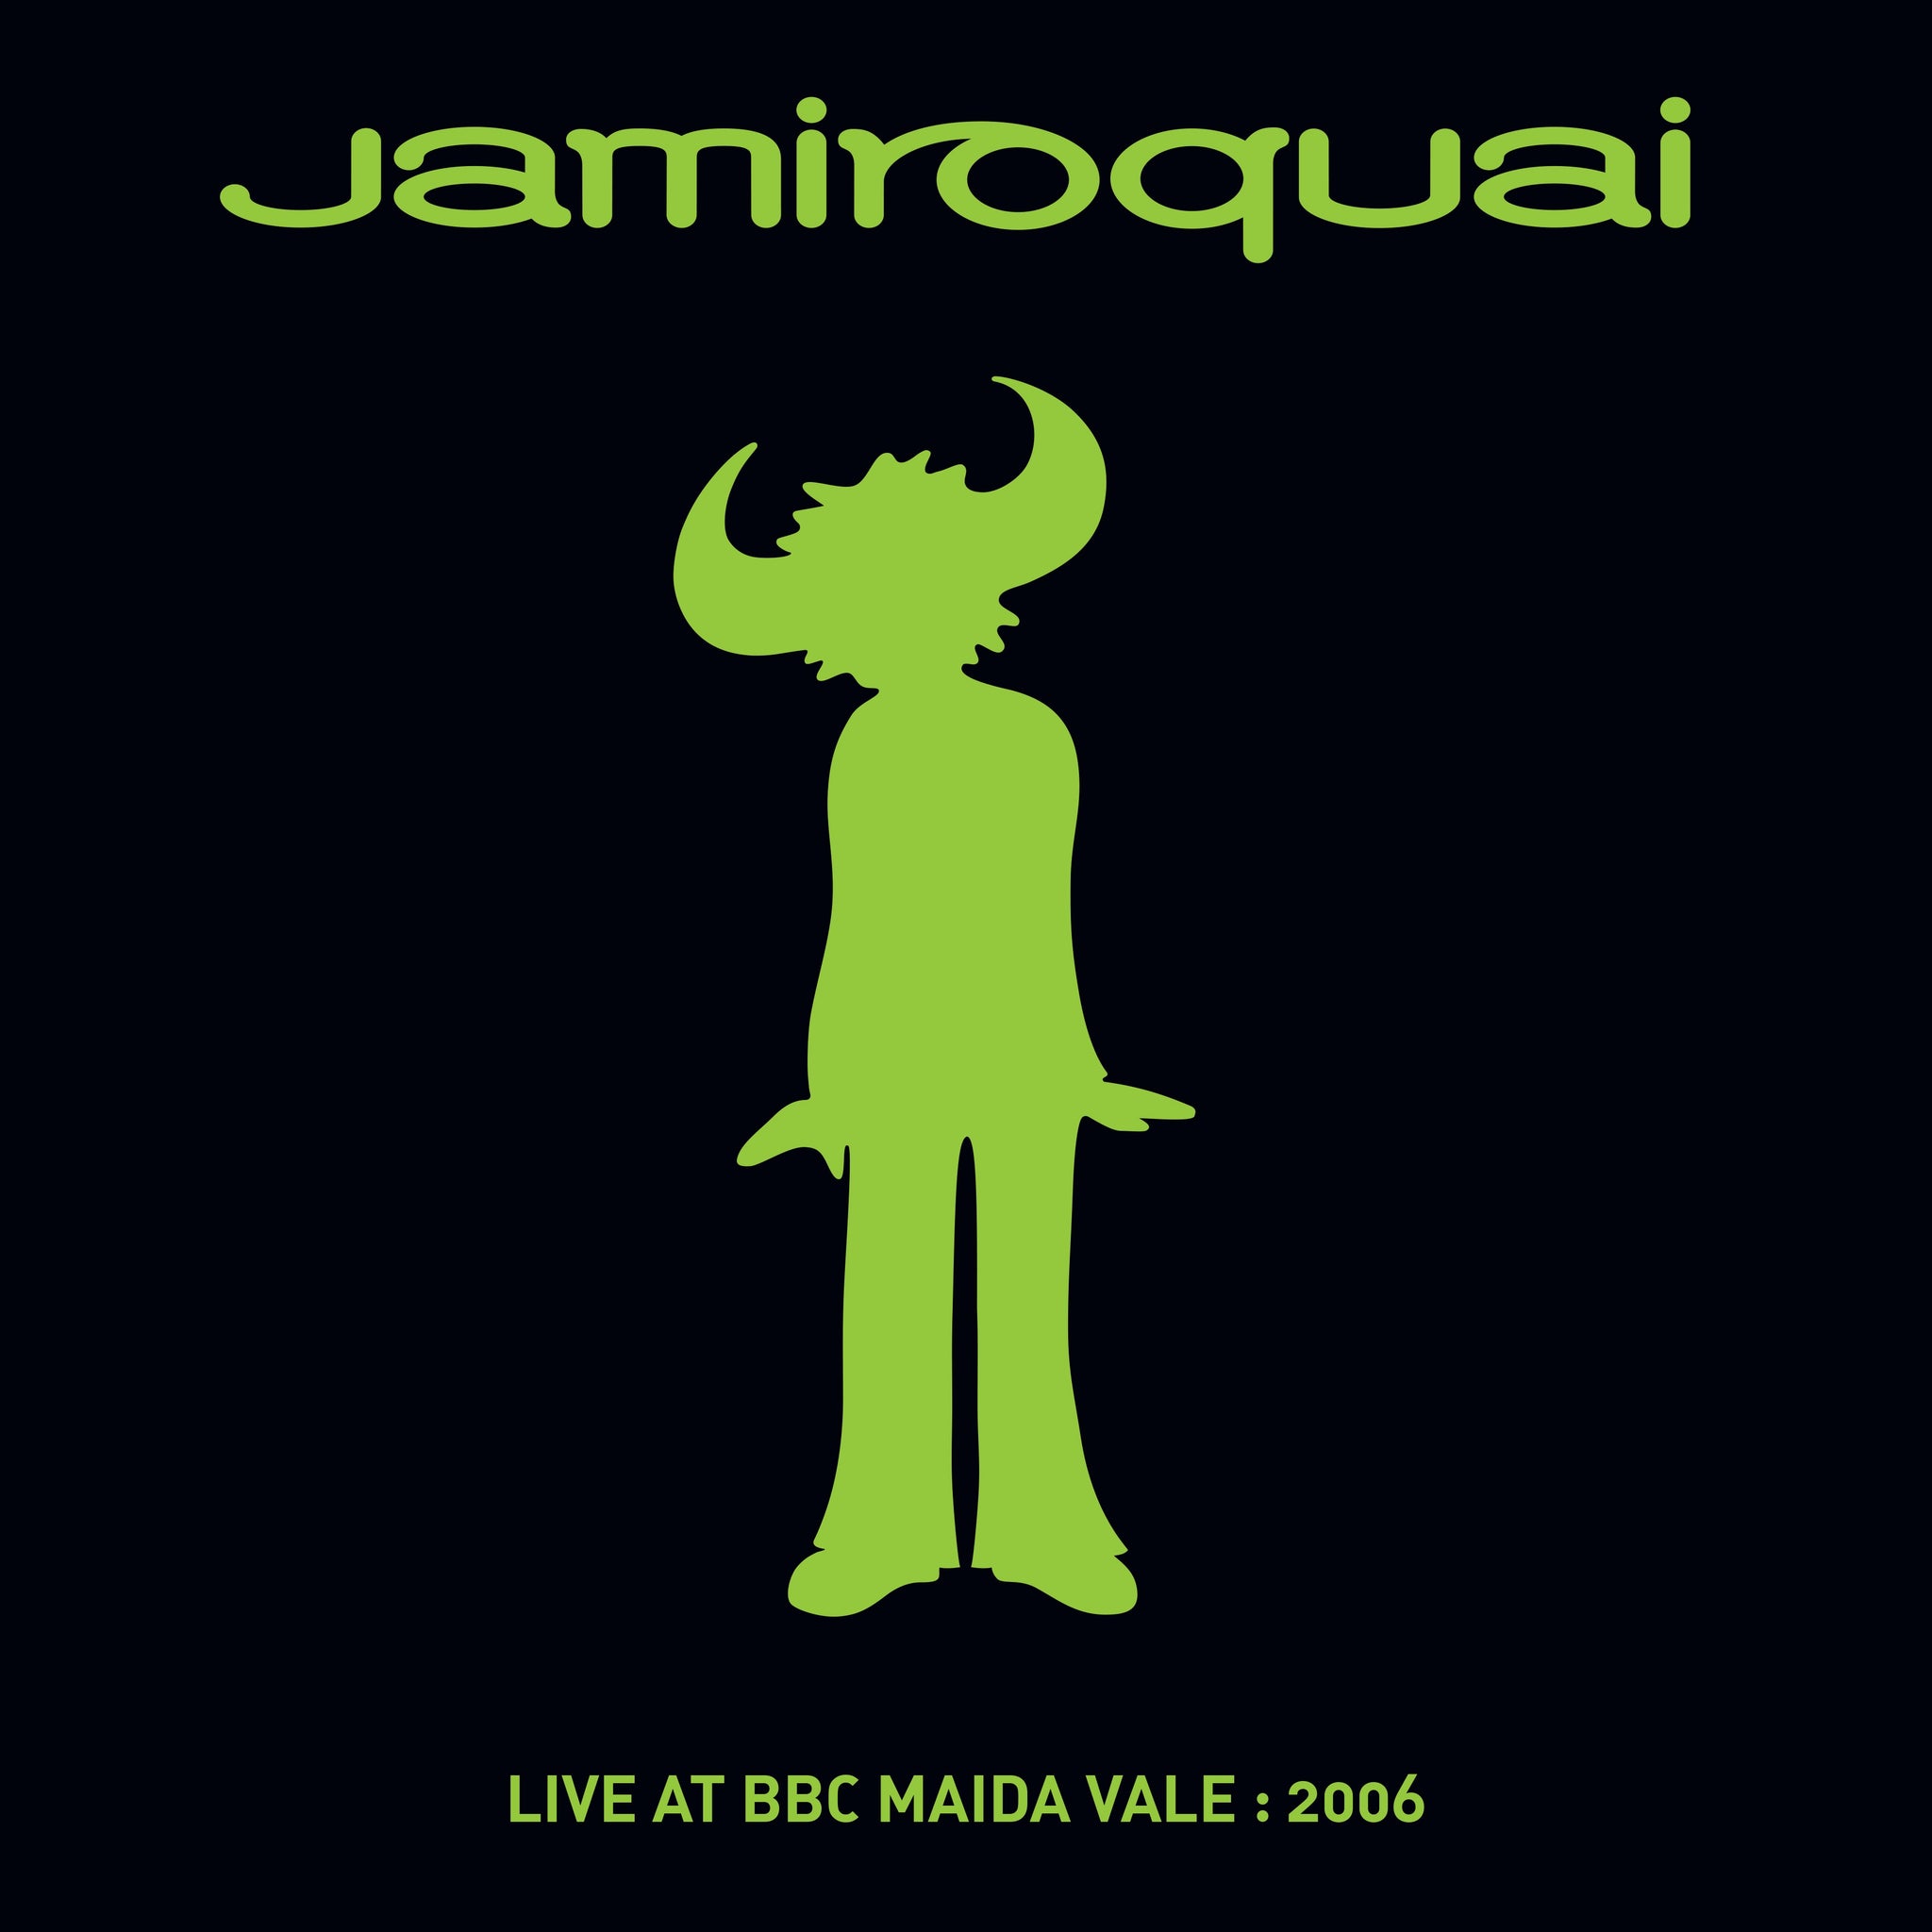 Jamiroquai - Live At BBC Maida Vale: 2006 - GREEN VINYL 12" (RSD24)